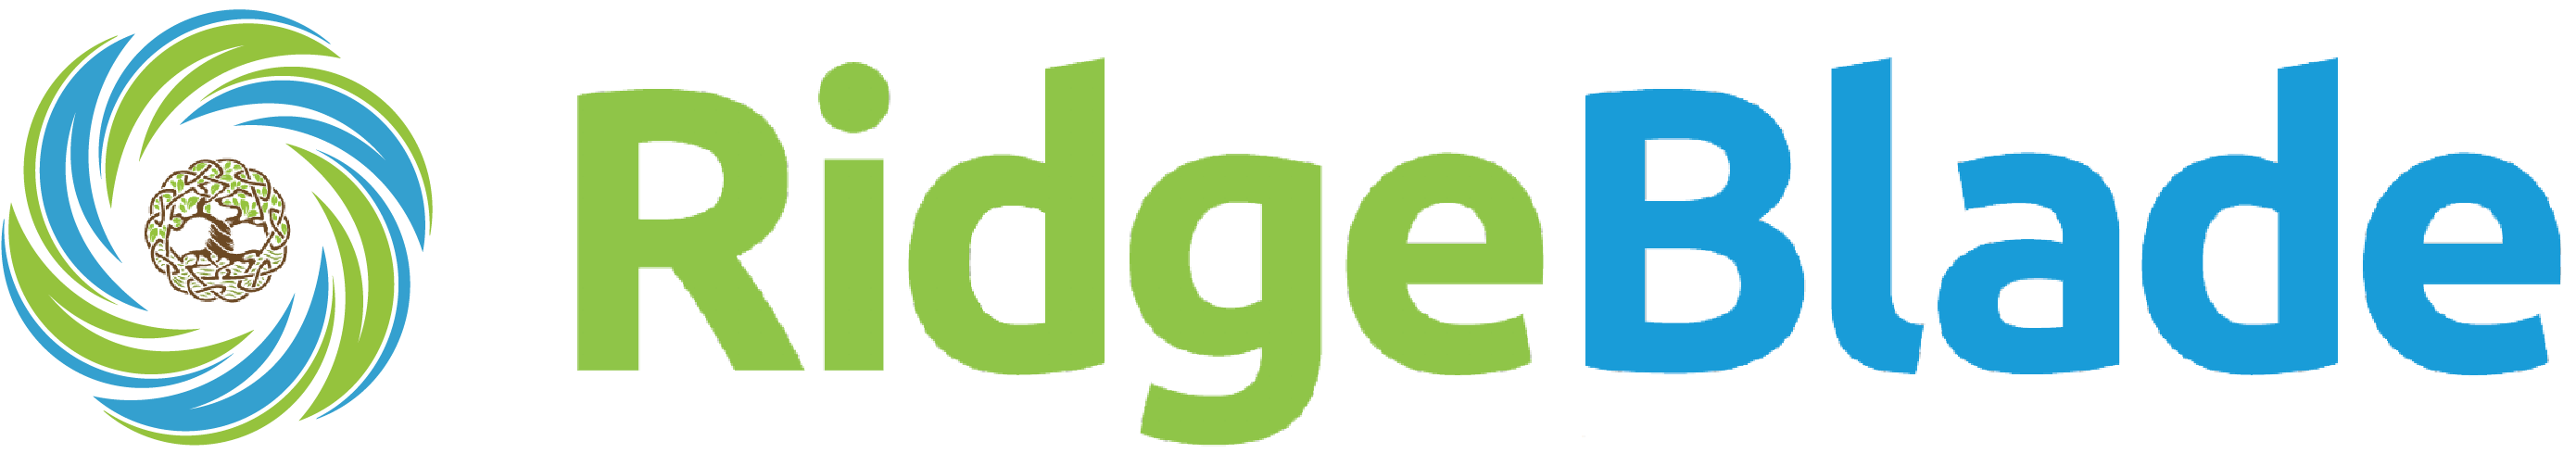 RidgeBlade Logo